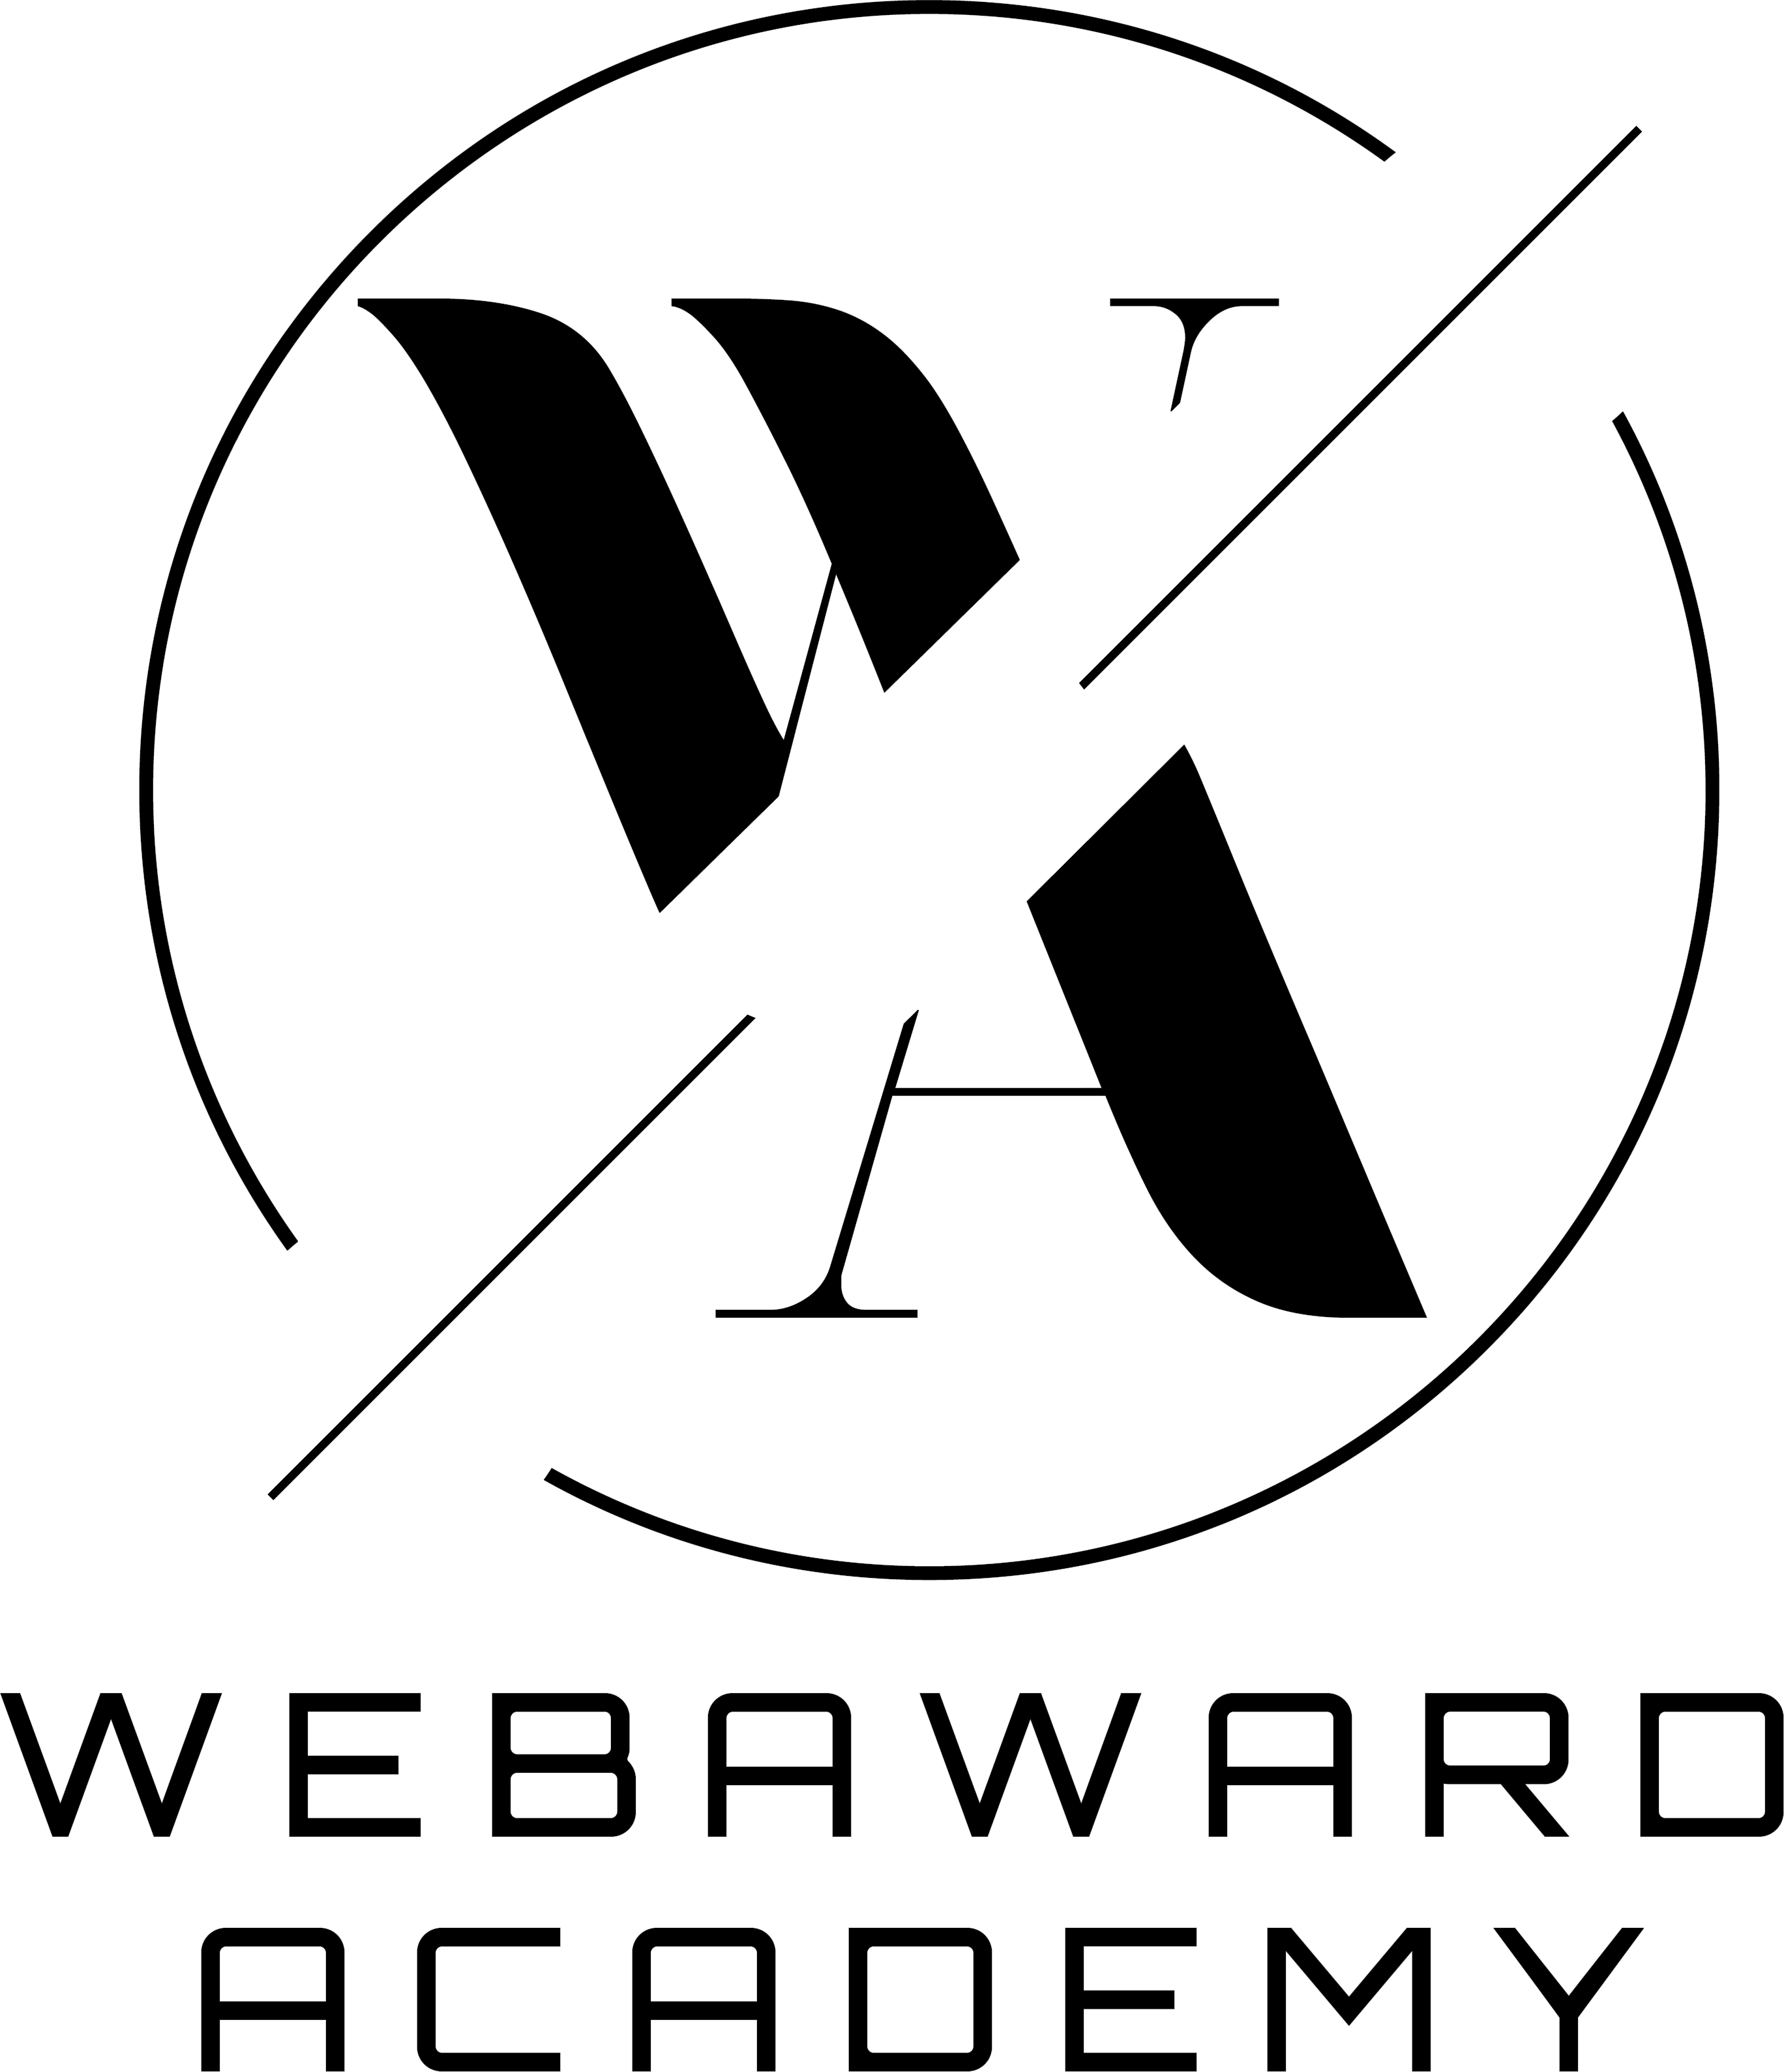 Webaward Academy Logo Black